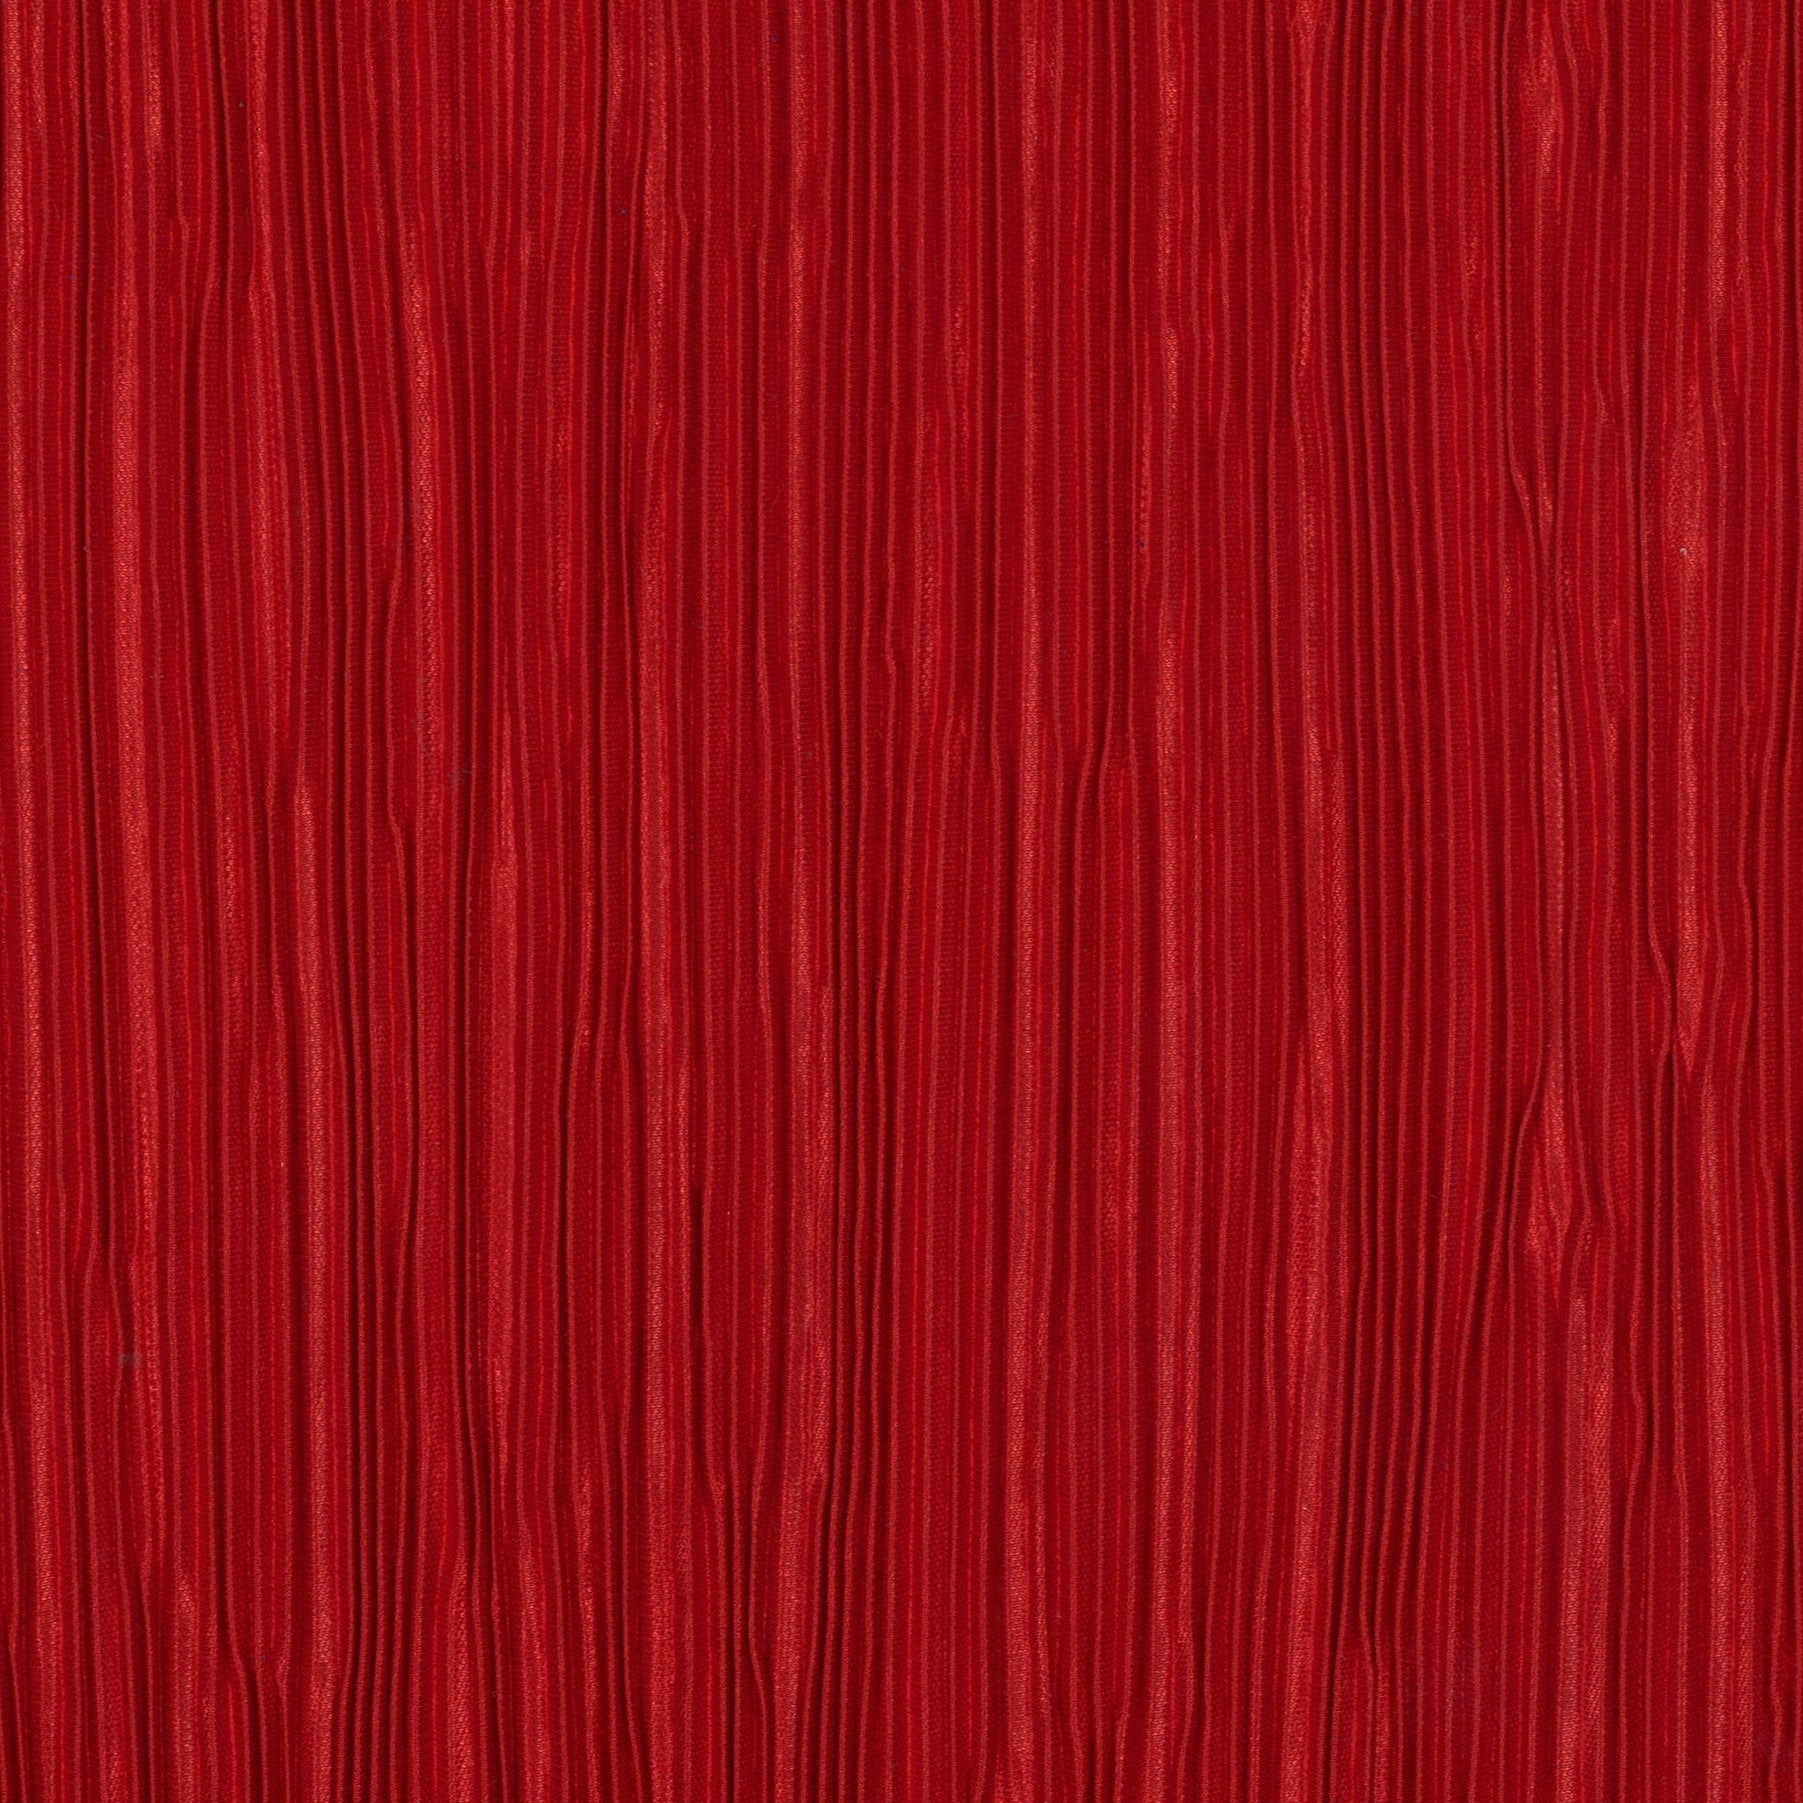 9761-05 Red Polyester Pleat Plain Dyed 100% 180g/yd 56" knit plain dyed pleat polyester red Solid Color, Pleat - knit fabric - woven fabric - fabric company - fabric wholesale - fabric b2b - fabric factory - high quality fabric - hong kong fabric - fabric hk - acetate fabric - cotton fabric - linen fabric - metallic fabric - nylon fabric - polyester fabric - spandex fabric - chun wing hing - cwh hk - fabric worldwide ship - 針織布 - 梳織布 - 布料公司- 布料批發 - 香港布料 - 秦榮興